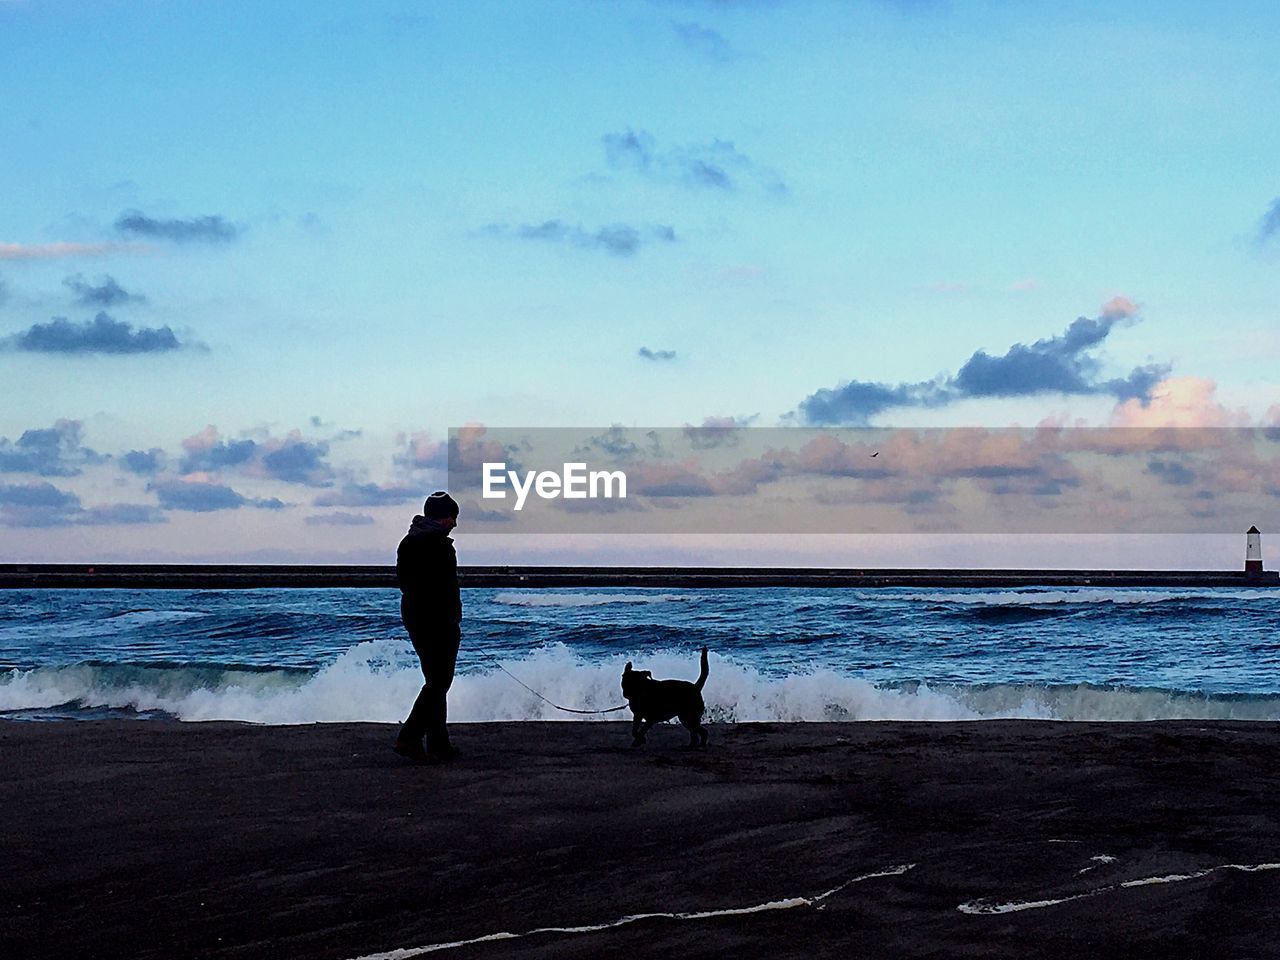 Silhouette man with dog on beach against sky at dusk